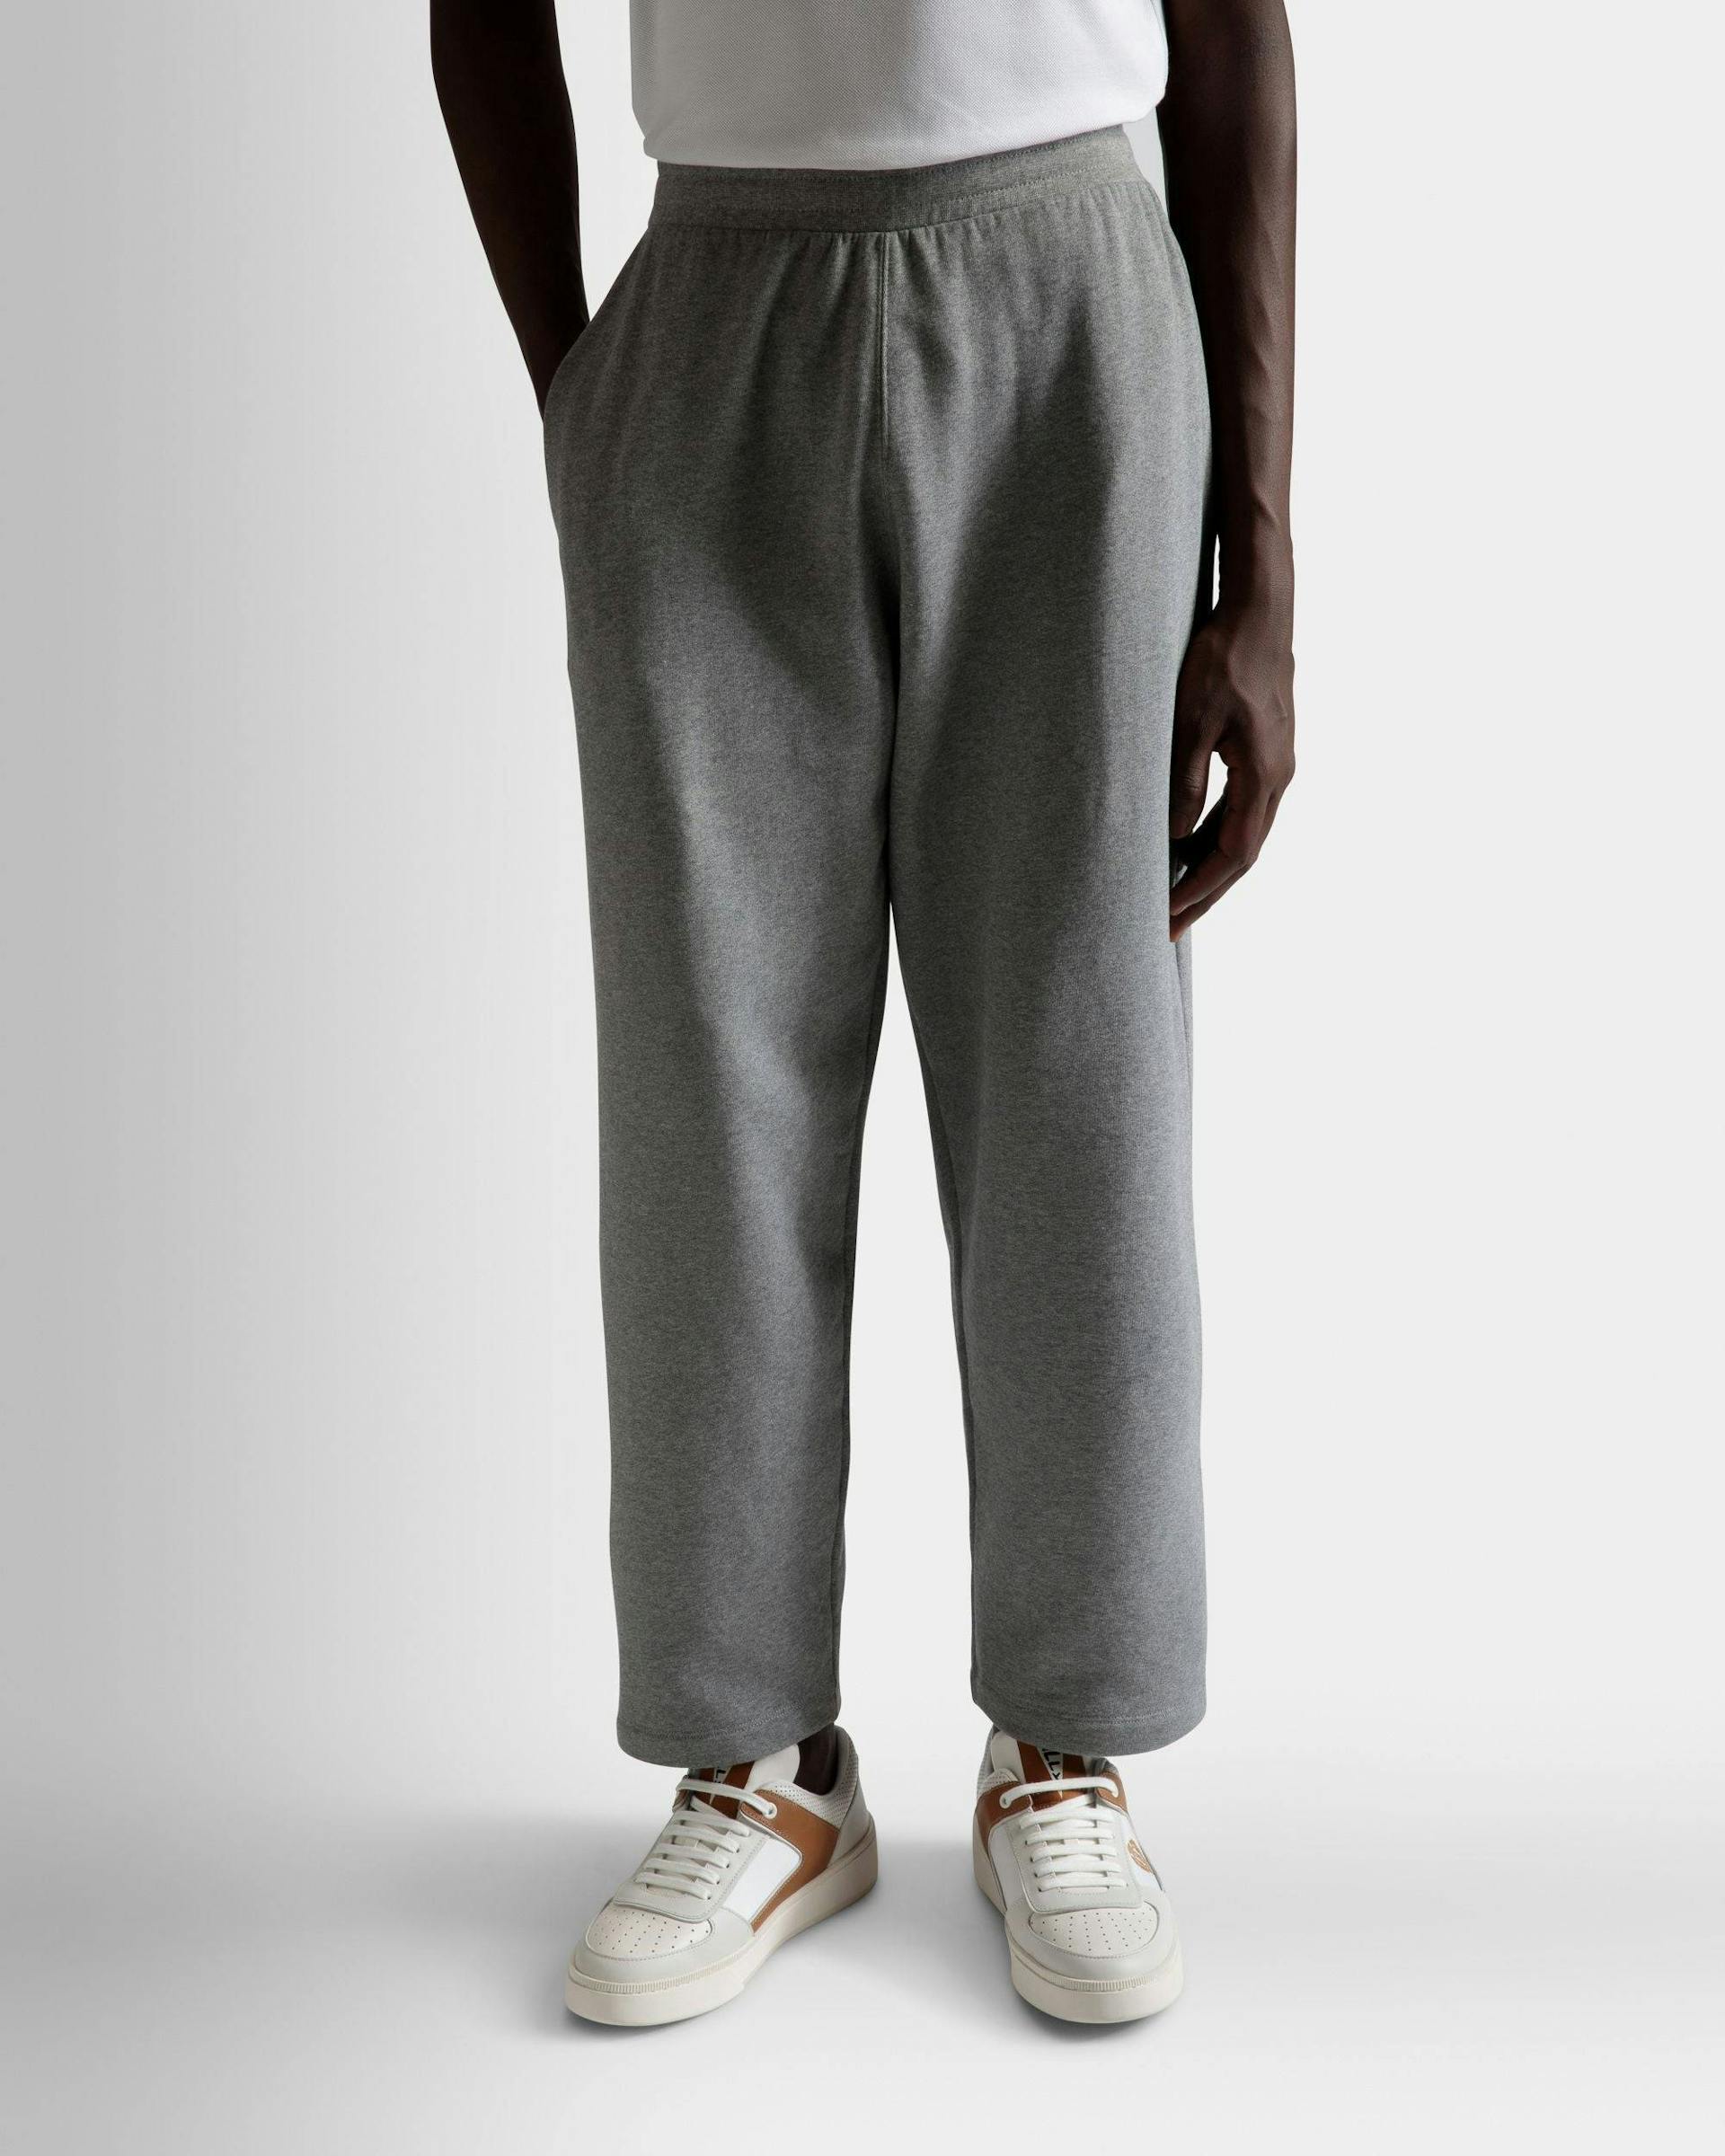 Men's Drawstring Sweatpants In Gray Melange Cotton | Bally | On Model Close Up